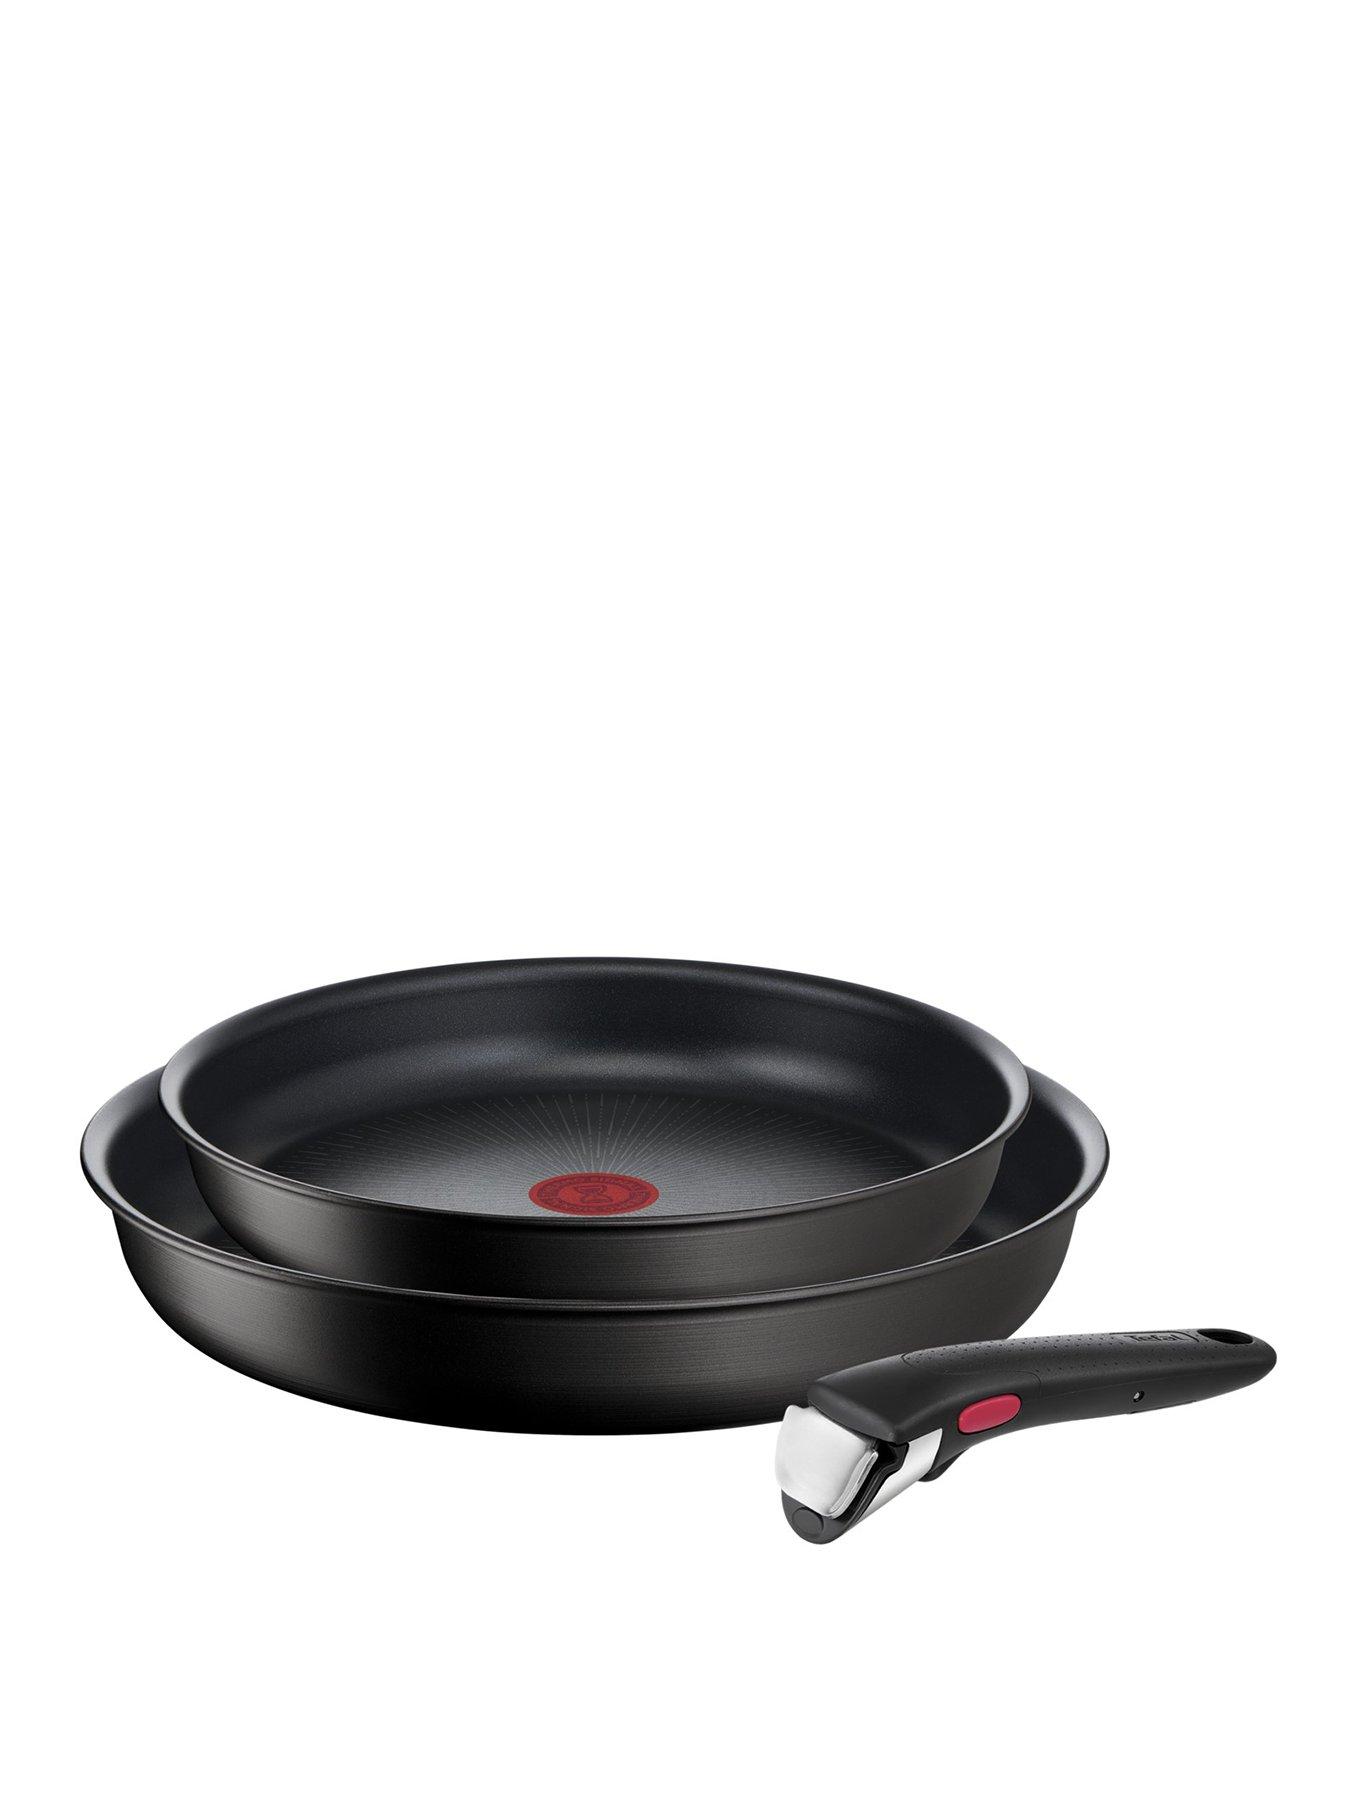  Tefal Ingenio Unlimited, 28cm Frying Pan, Stackable